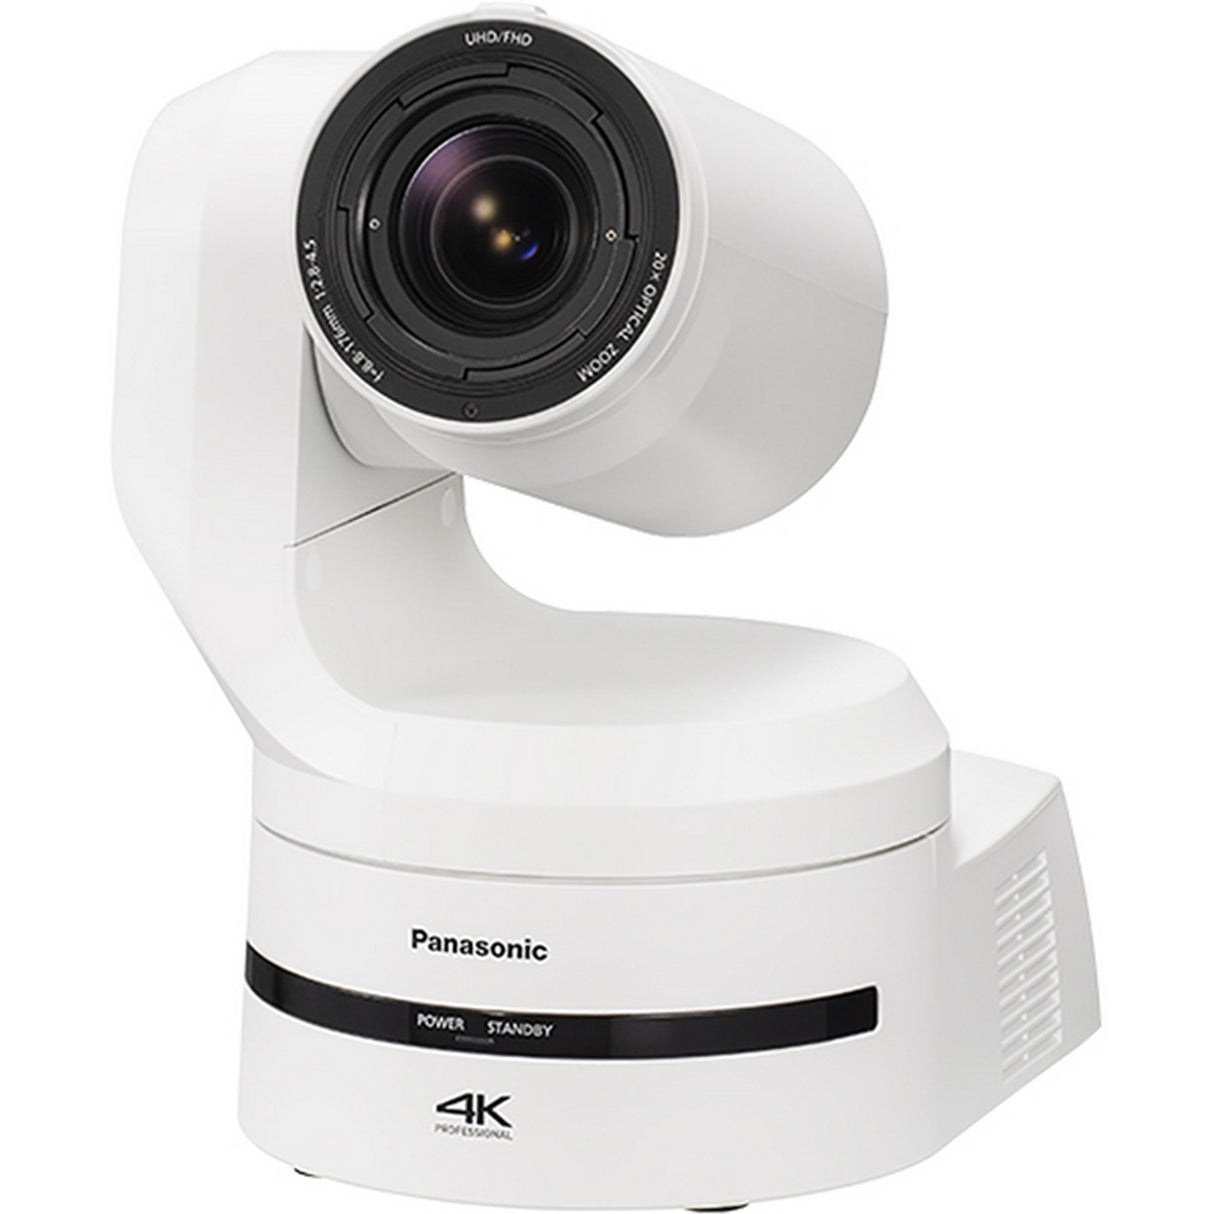 Panasonic AW-UE160 4K PTZ Camera with OLPF, White